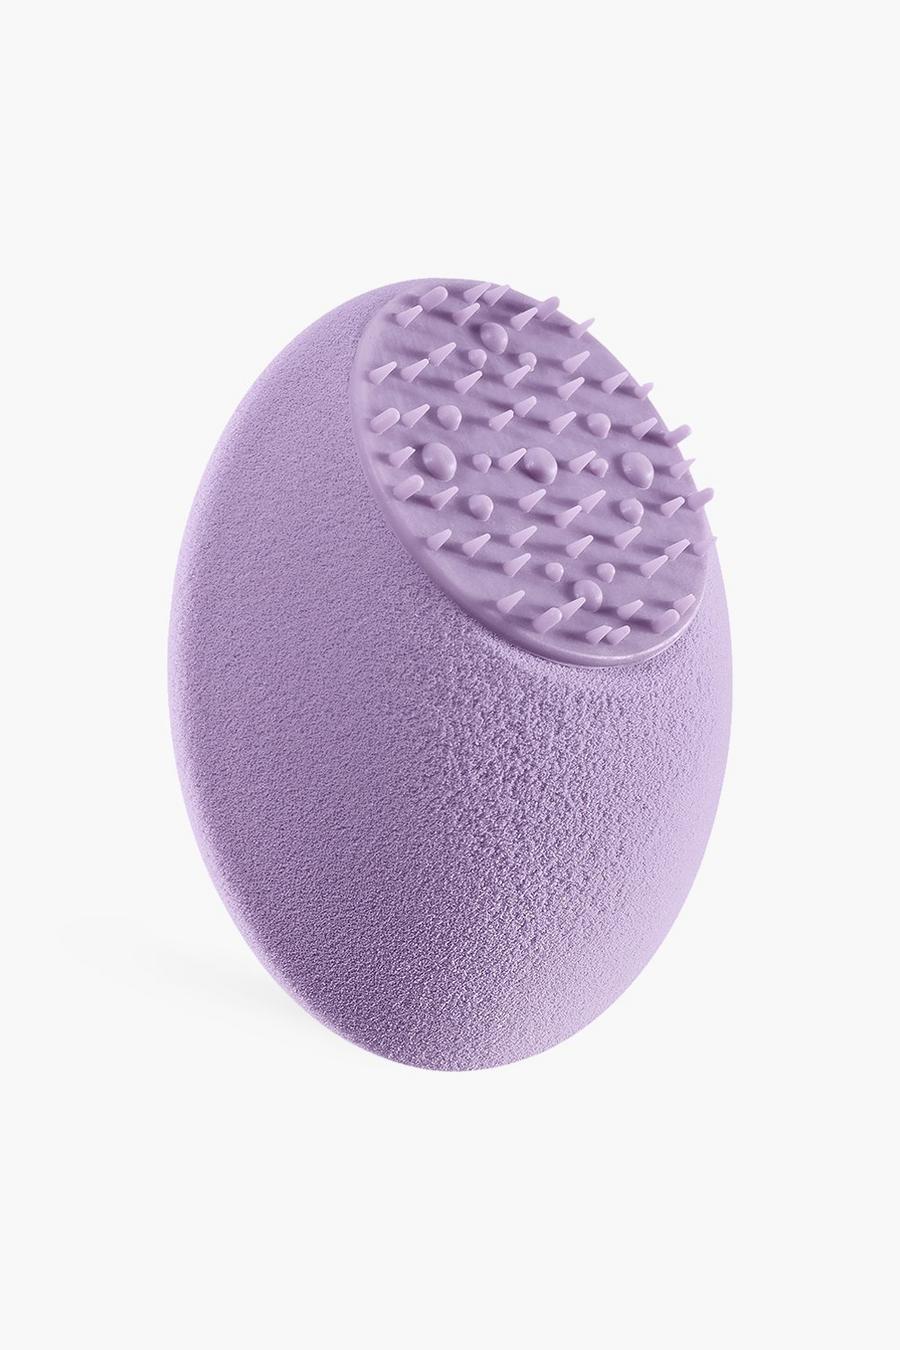 Real Technique Schwamm +Miracle Skincare-Schwamm, Lilac purple